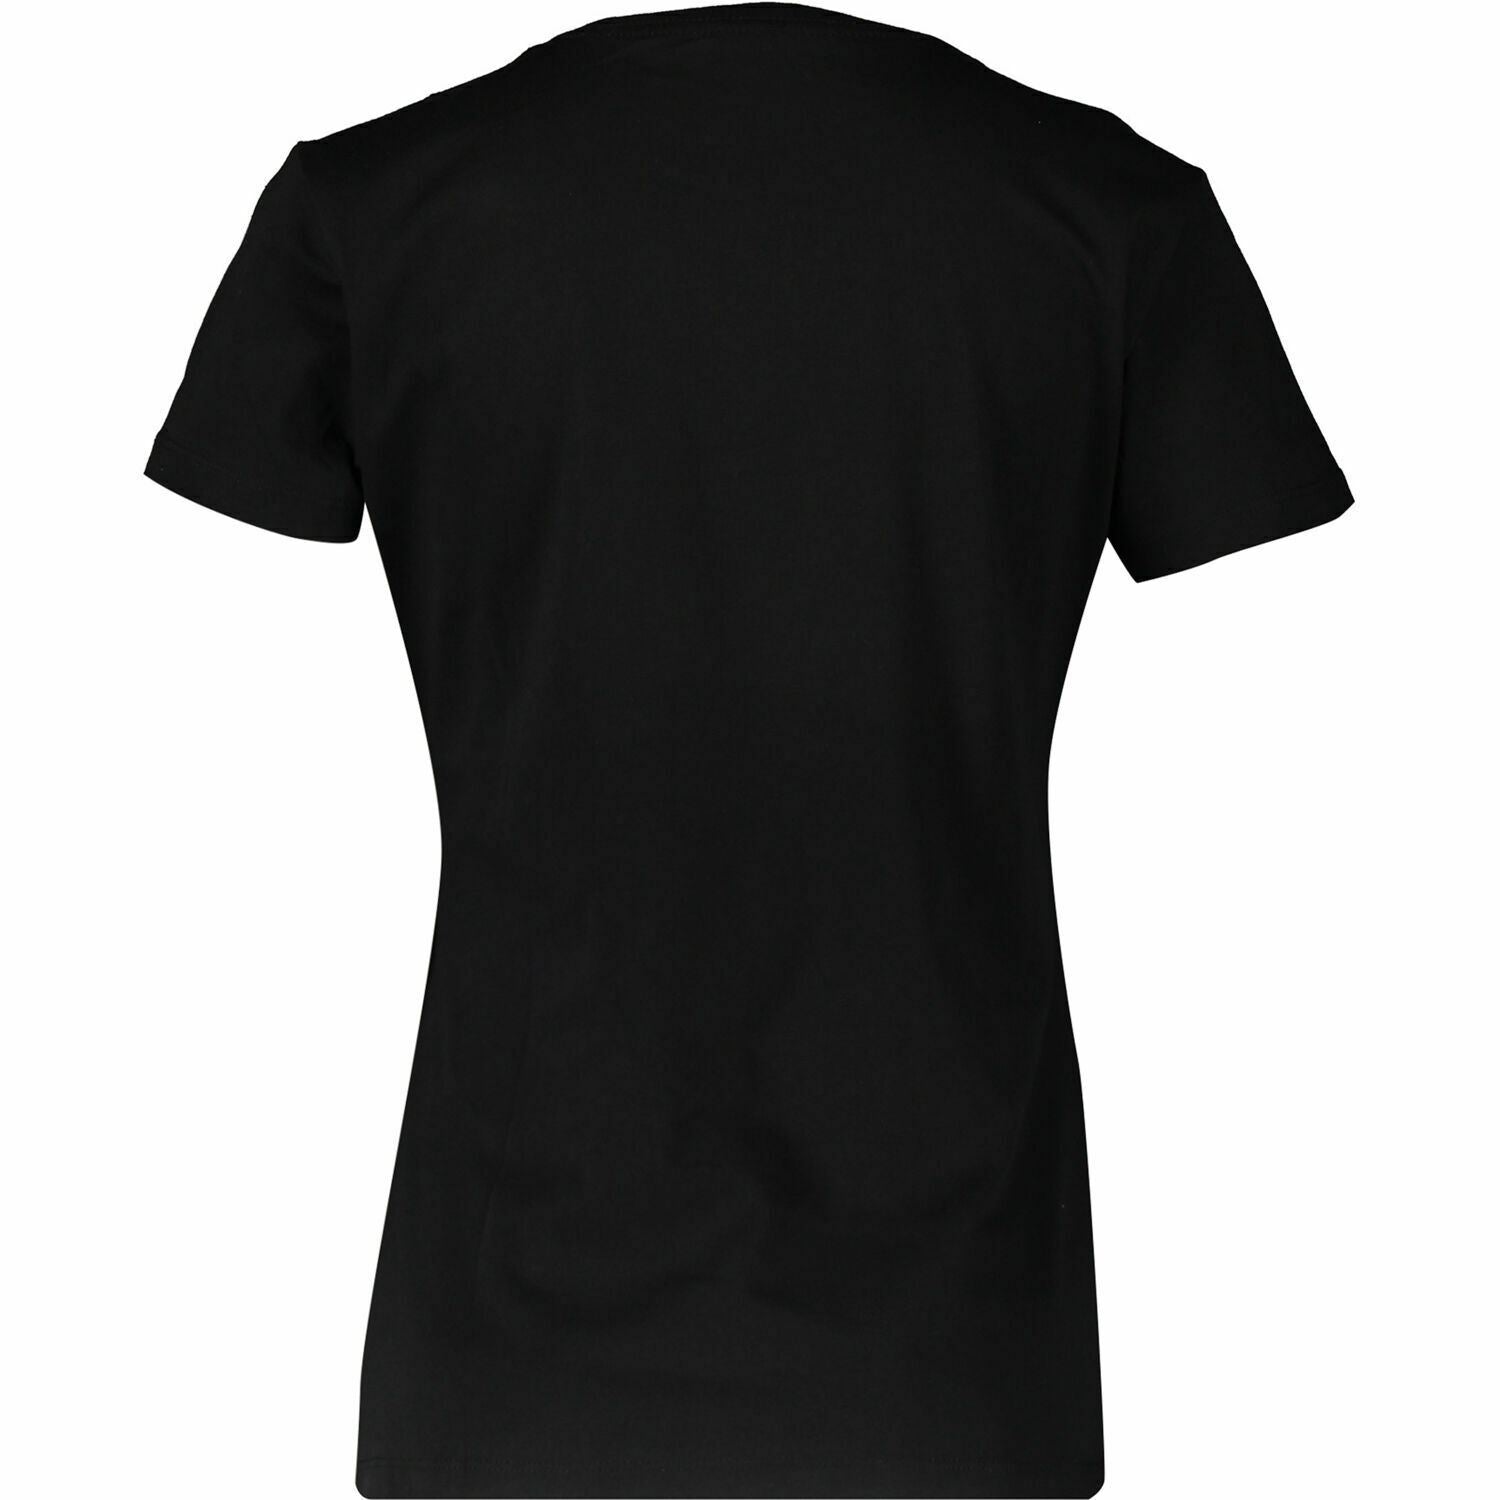 TRUE RELIGION Women's Short Sleeve Black & Pink Buddha Print T-Shirt Top size XL